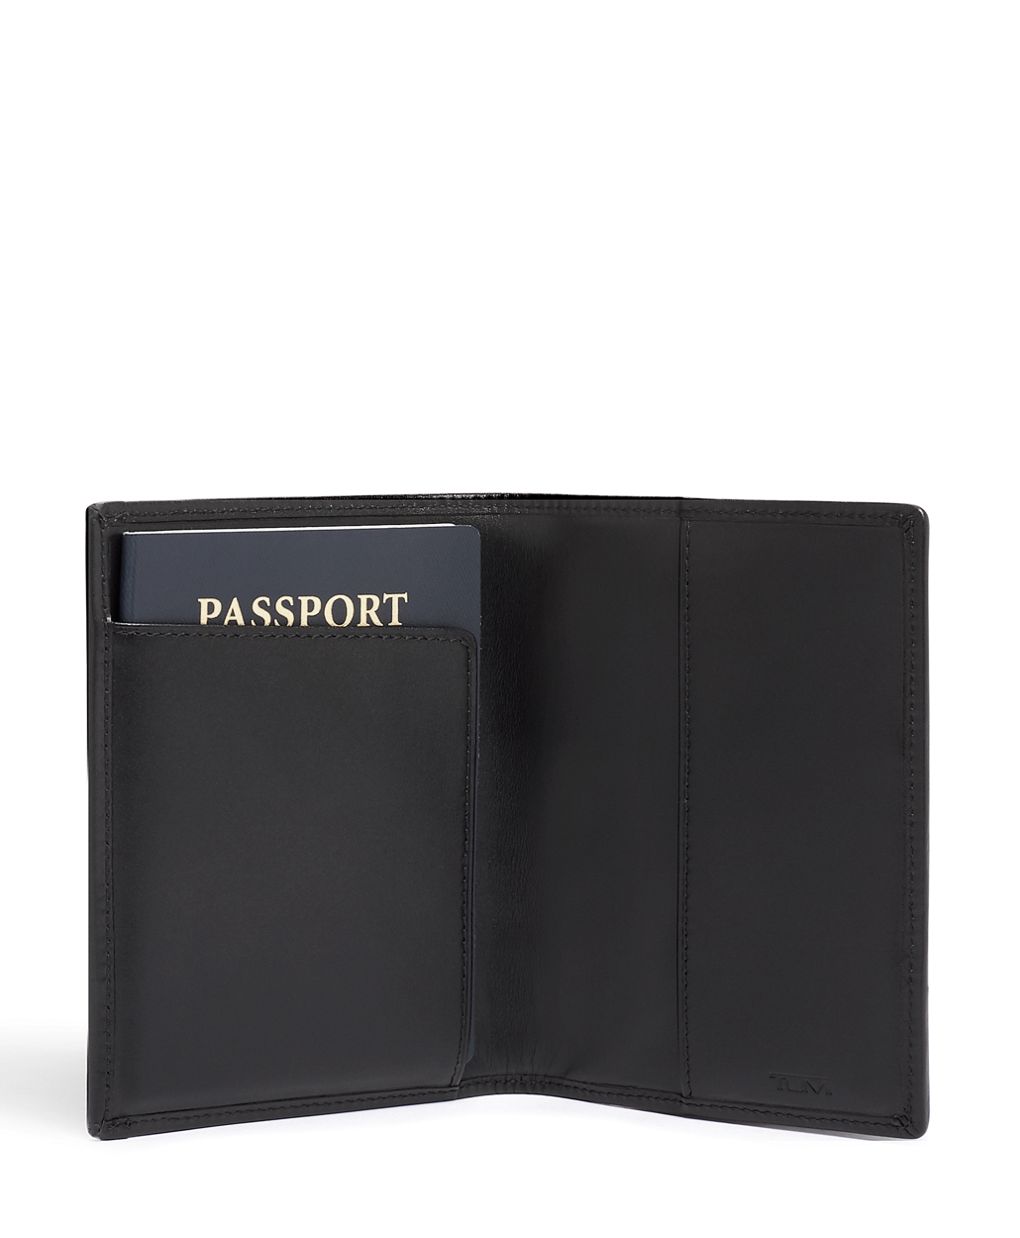 Gift Hamper For Men - Wallet, Passport Cover, Eyewear Case And